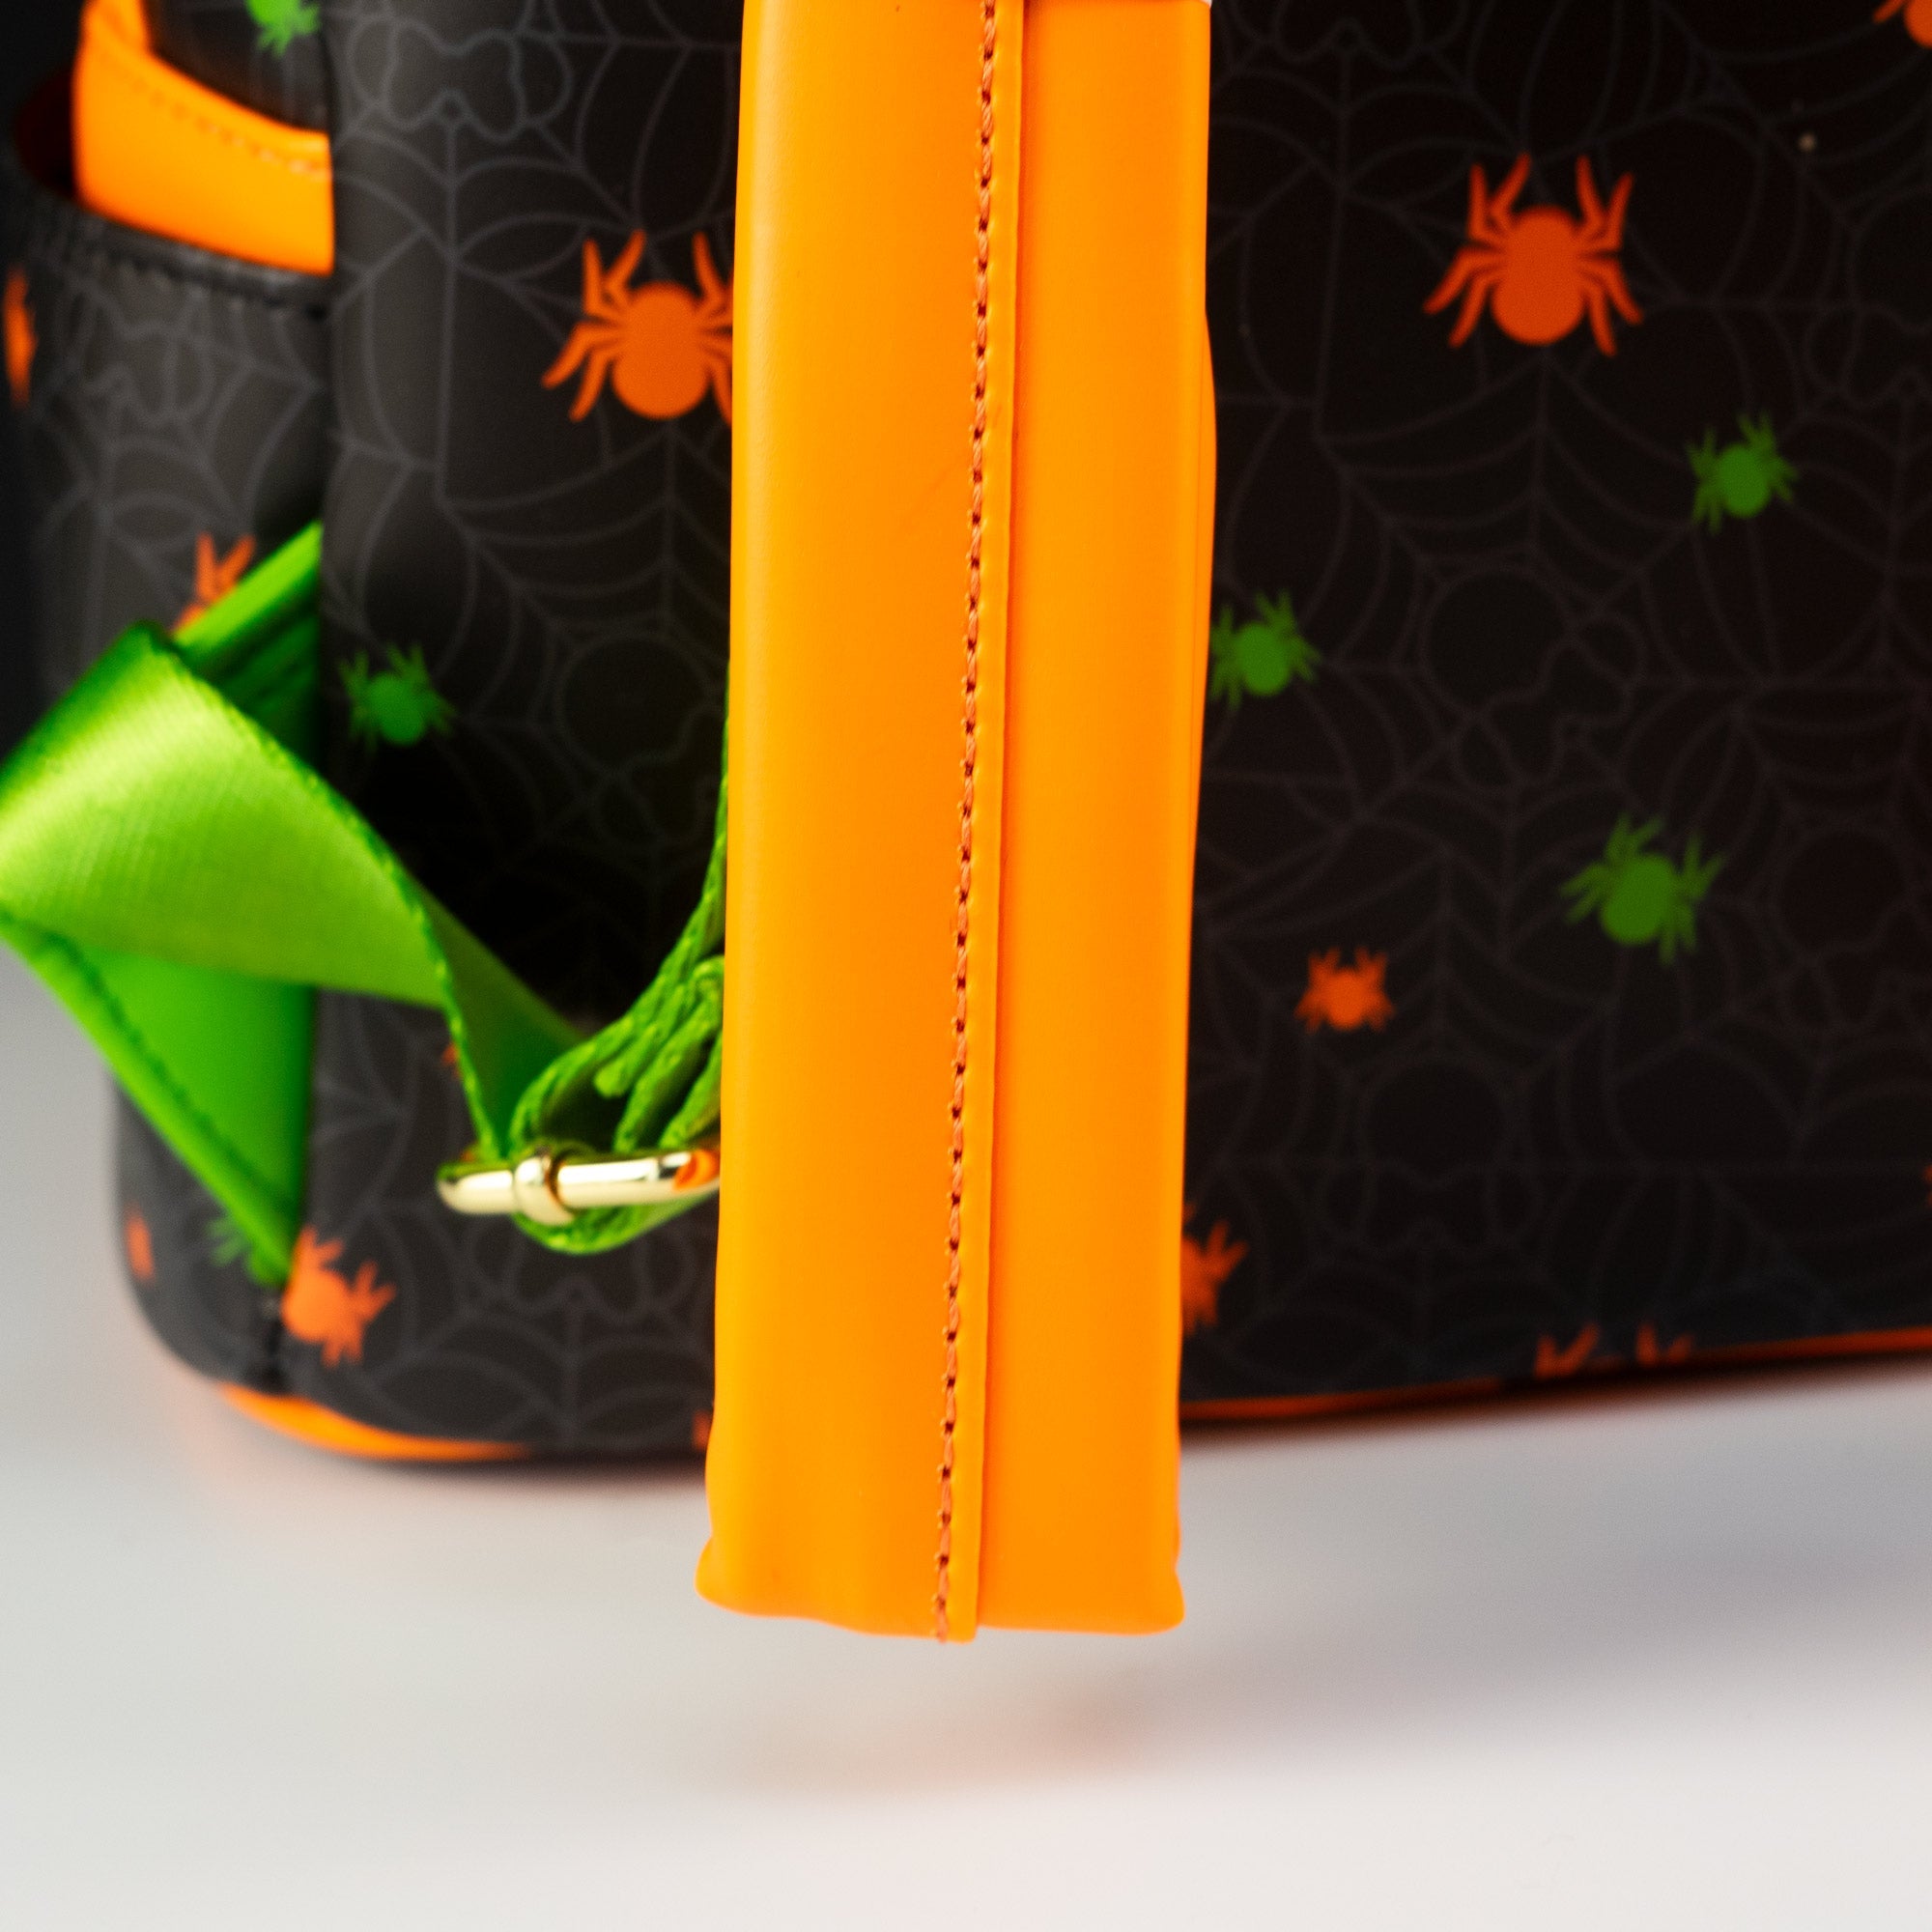 Loungefly x Disney Minnie - O - Lantern Pumpkin Minnie Mouse Mini Backpack - GeekCore